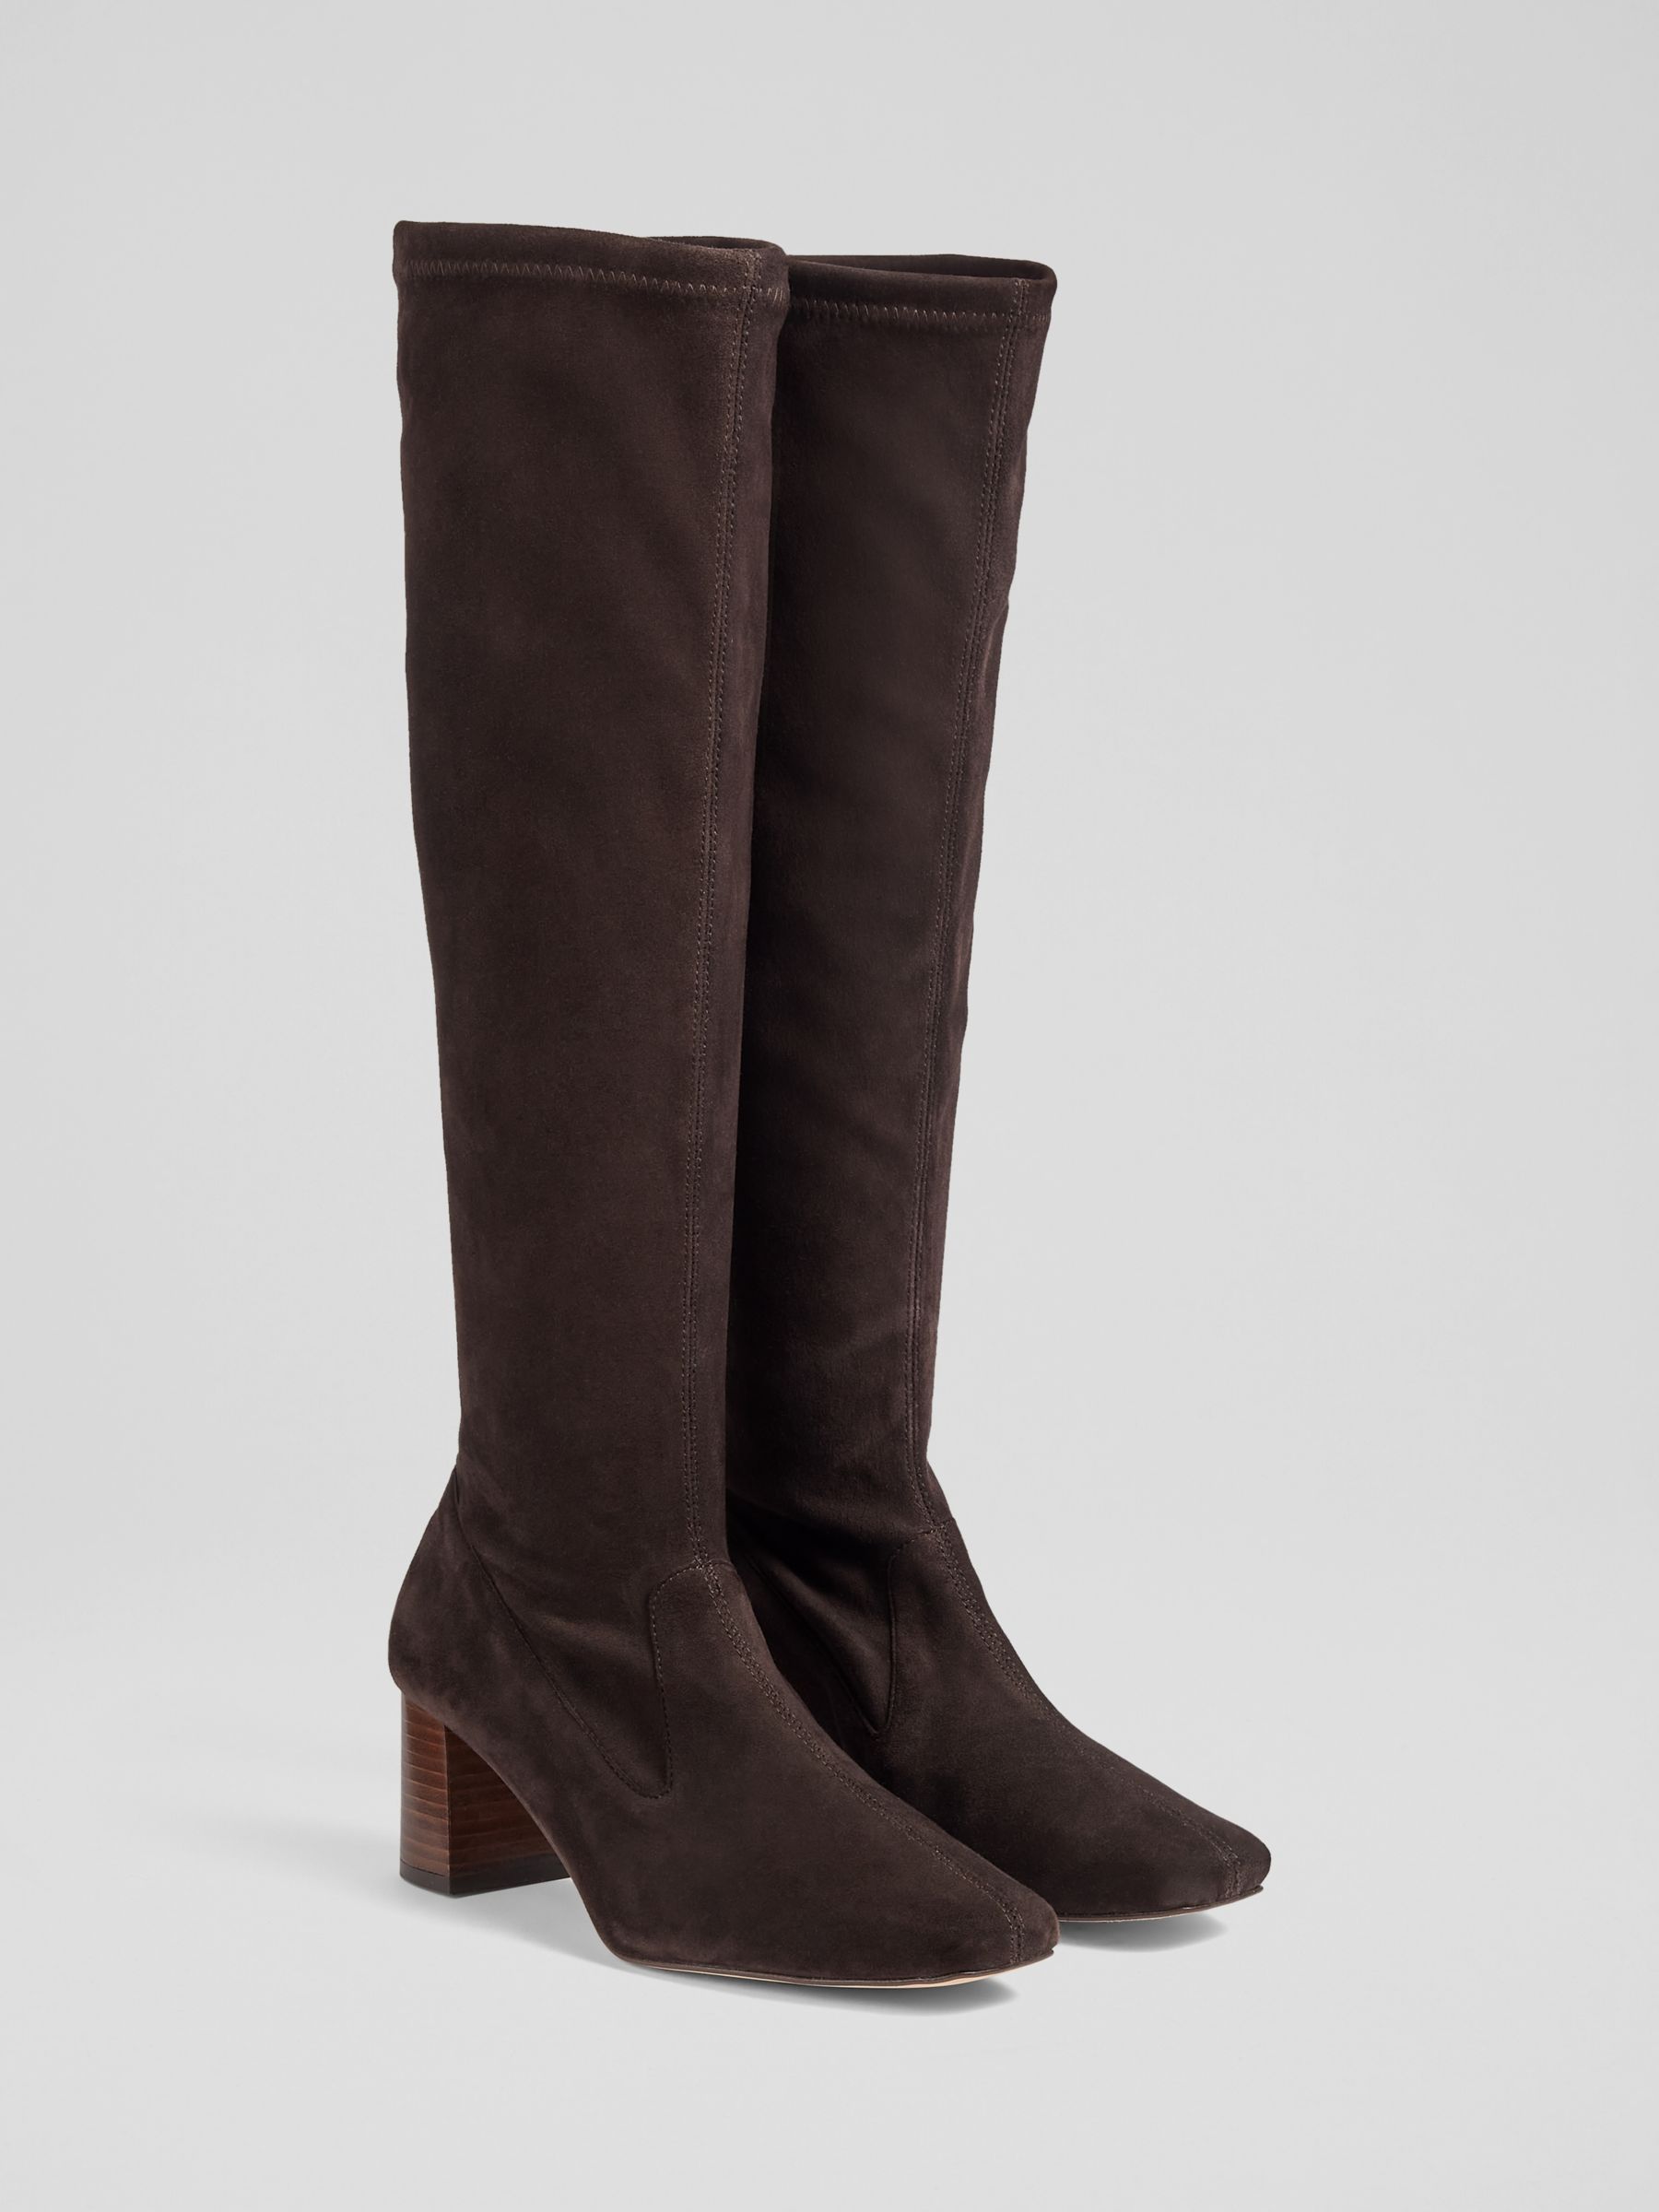 L.K.Bennett Davina Suede Knee High Boots, Chocolate, 5